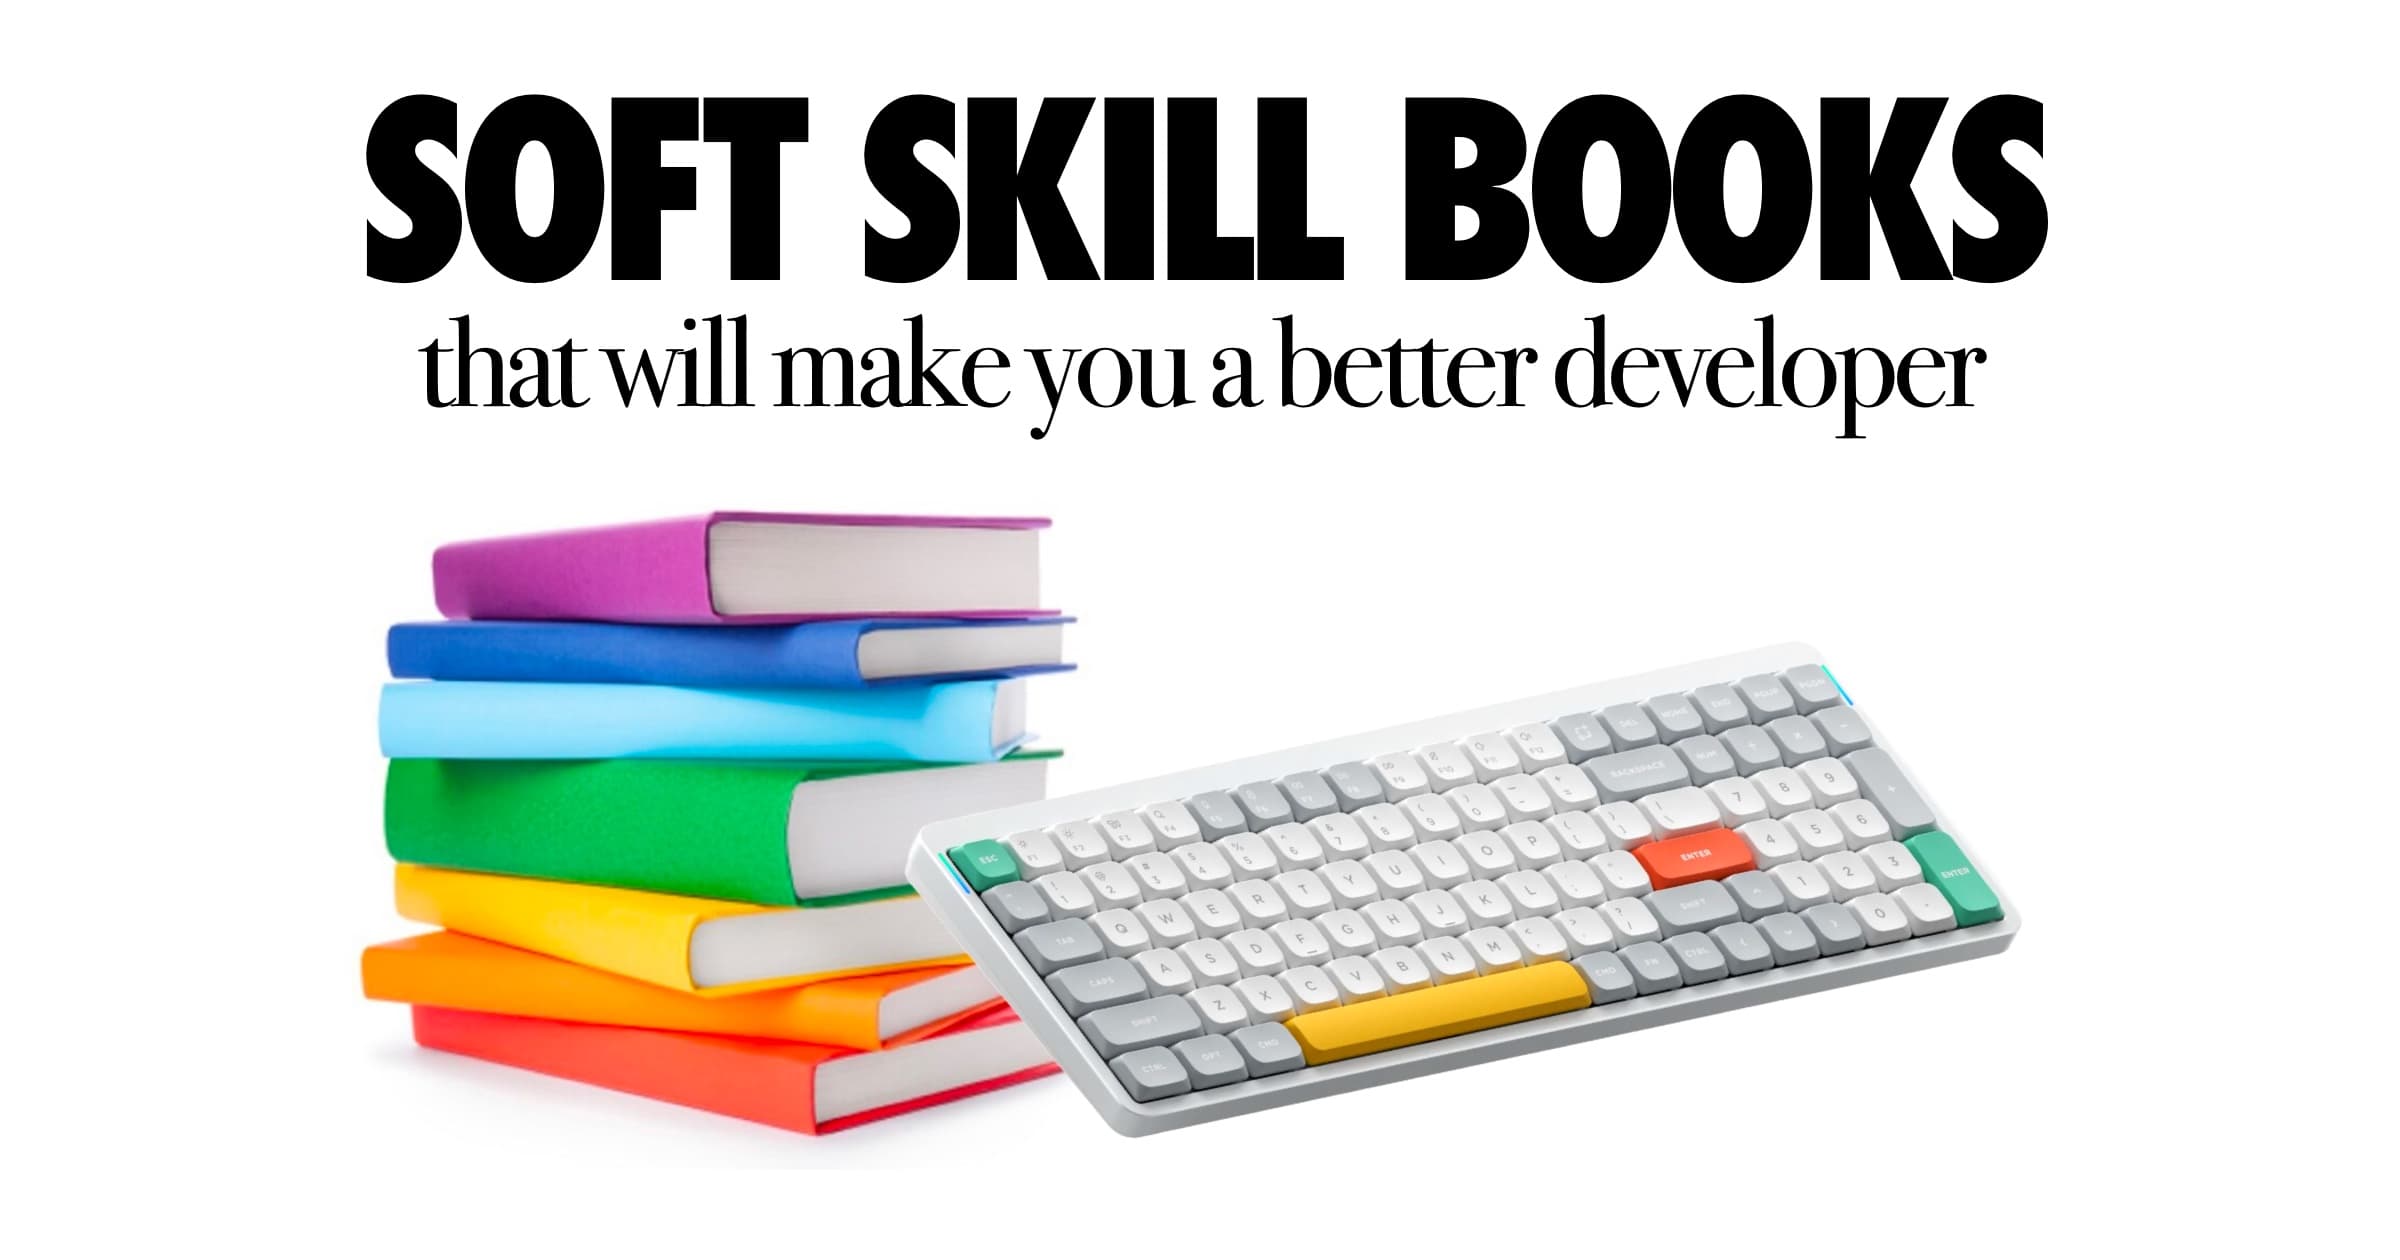 Soft skill books that will make you a better developer